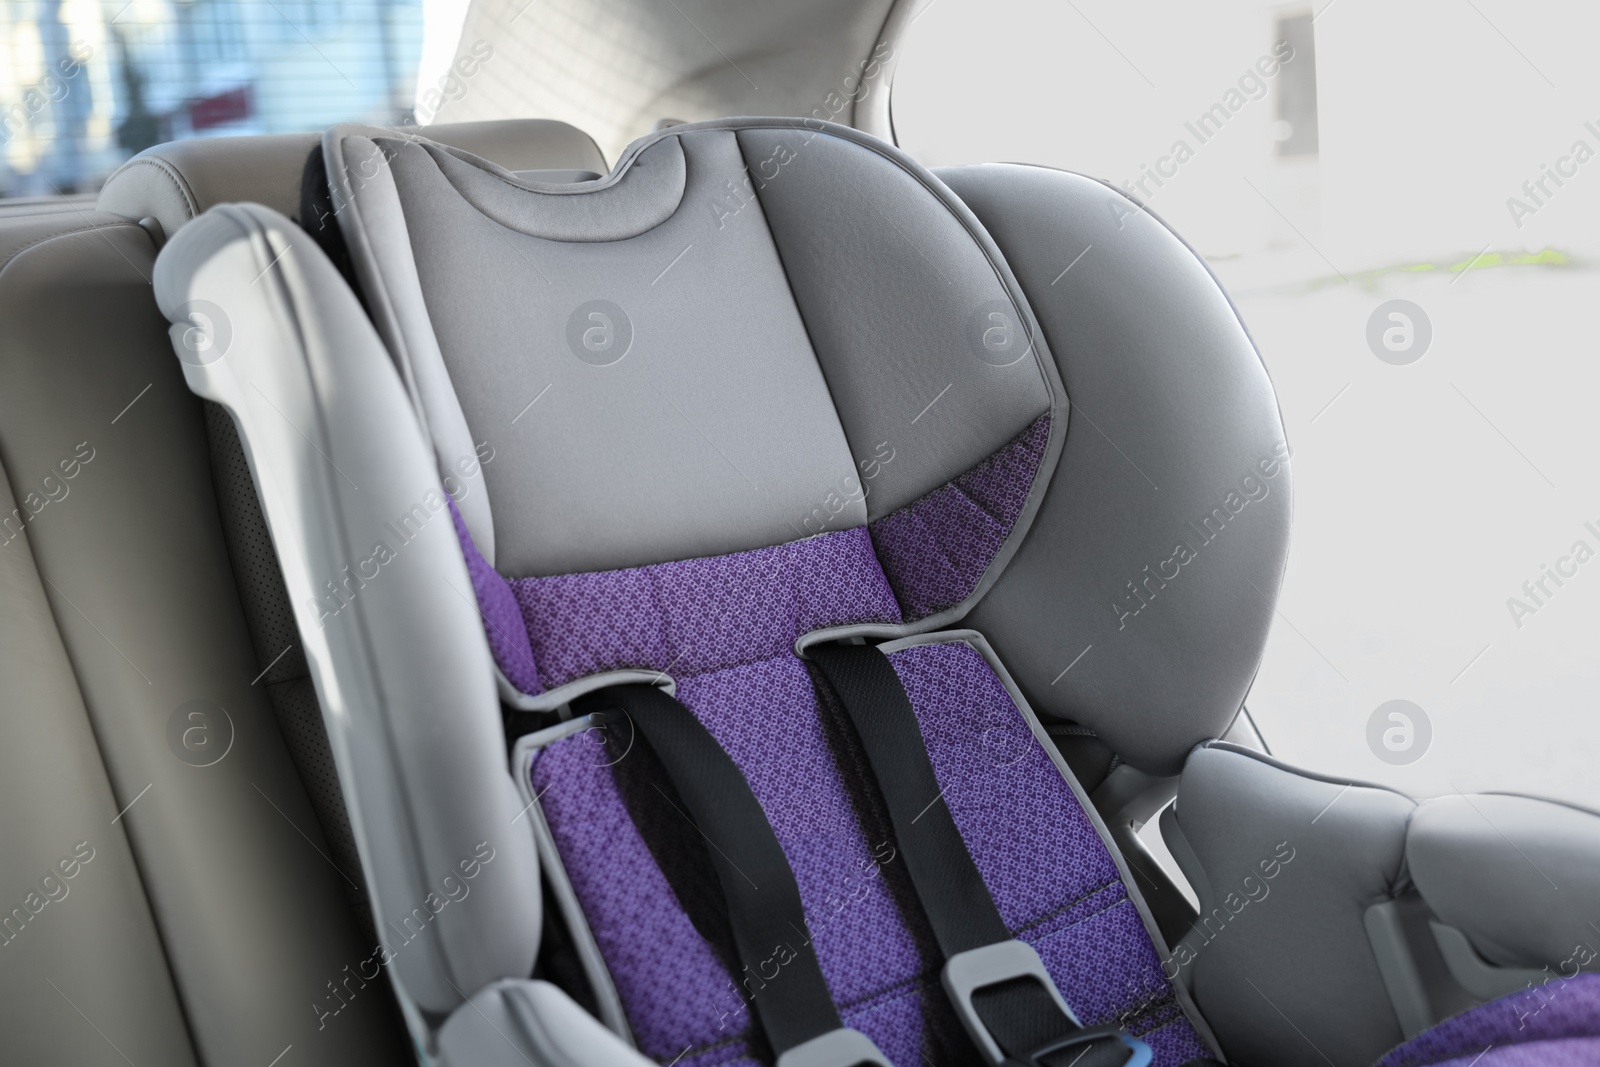 Photo of Empty modern child safety seat inside car